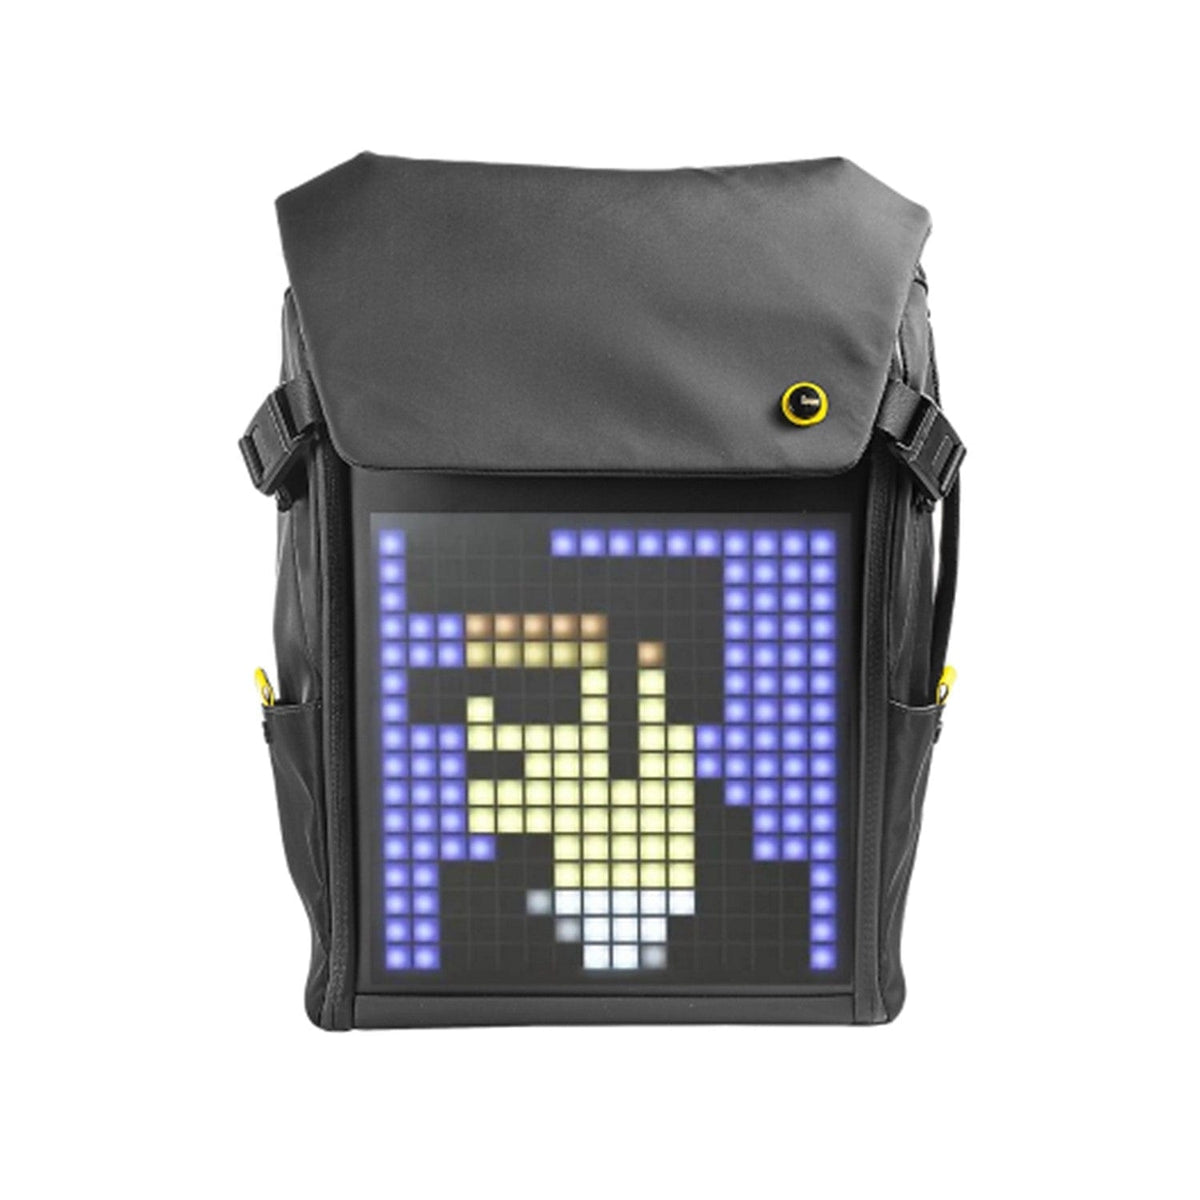 Divoom BackPack - M with Pixel Art Display